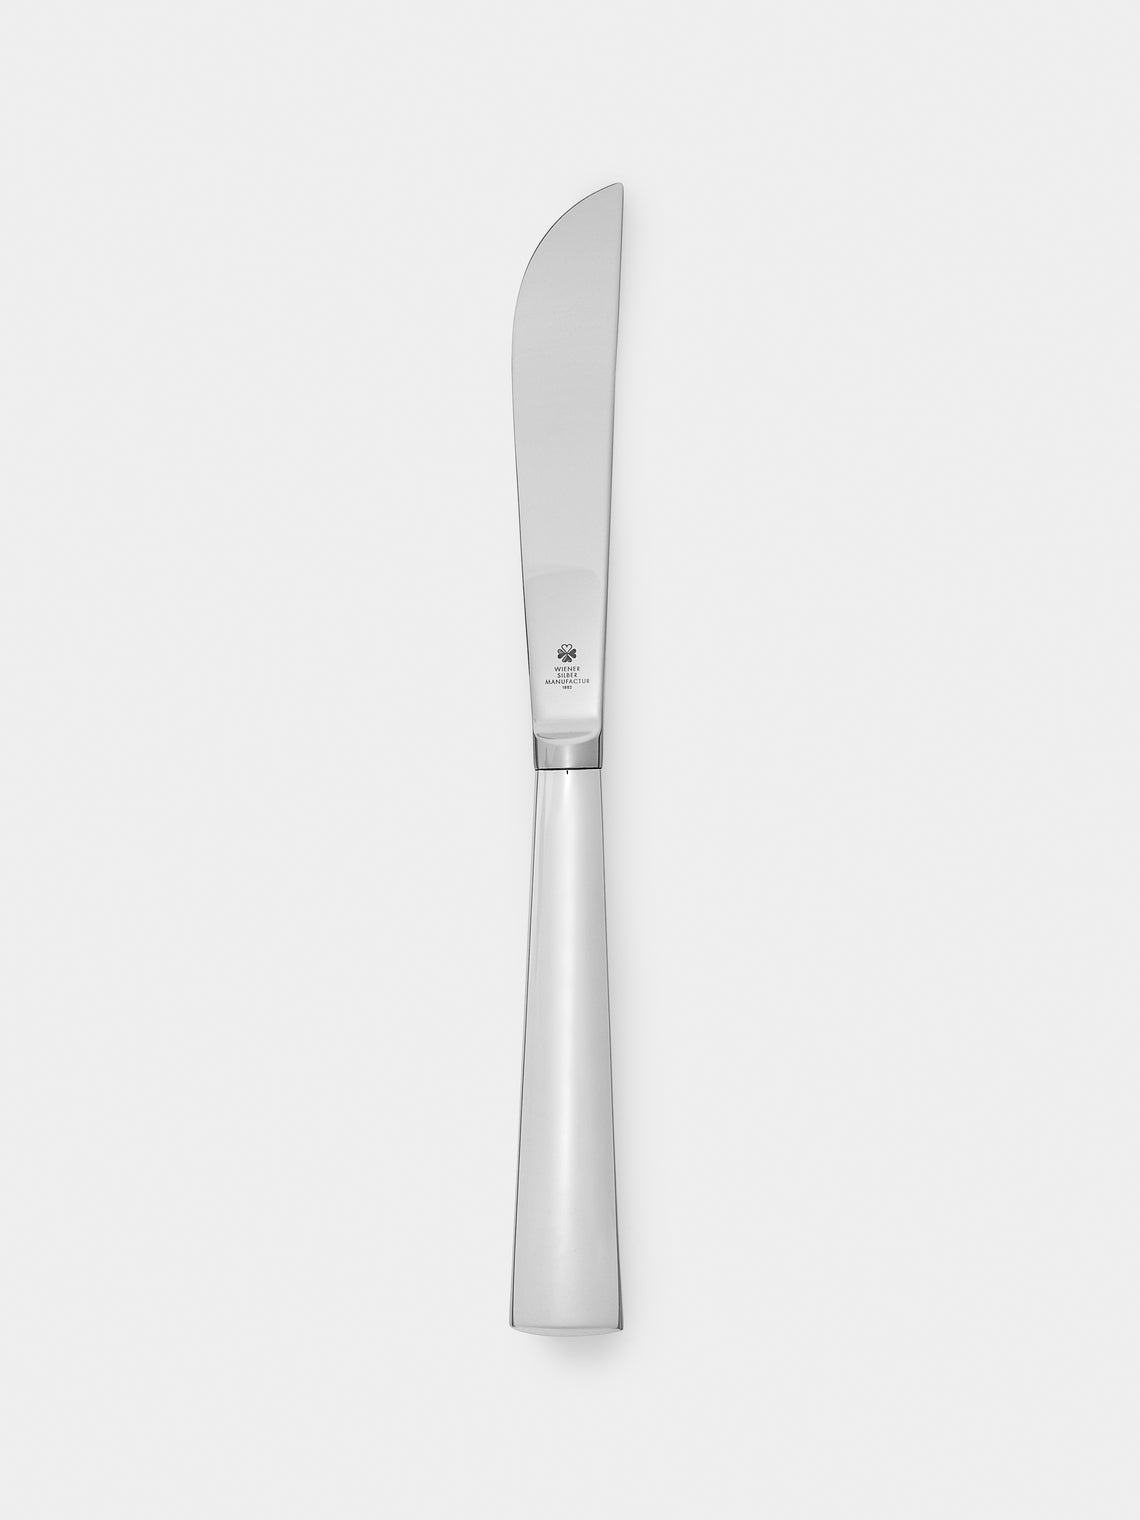 Wiener Silber Manufactur - Josef Hoffmann 135 Silver-Plated Dinner Knife -  - ABASK - 